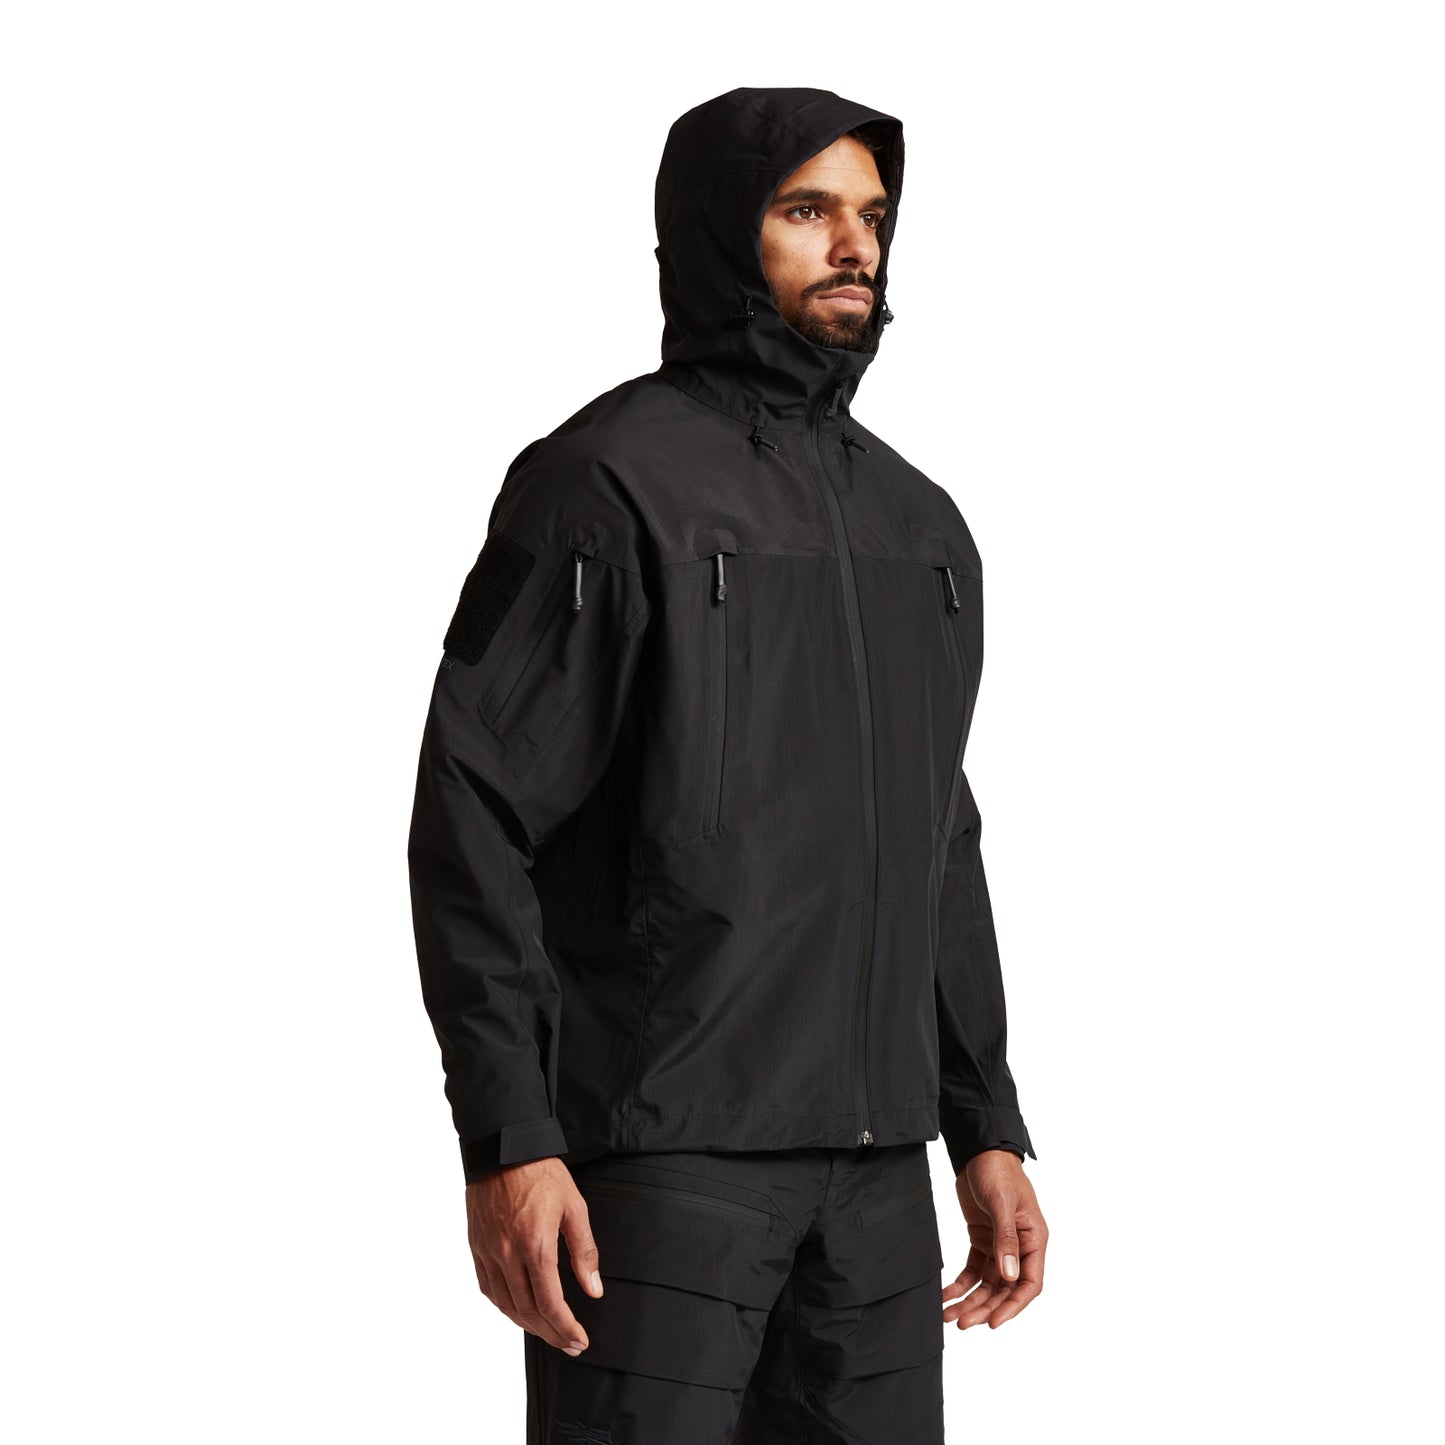 Wet Weather Protective Jacket - MDW (Black)